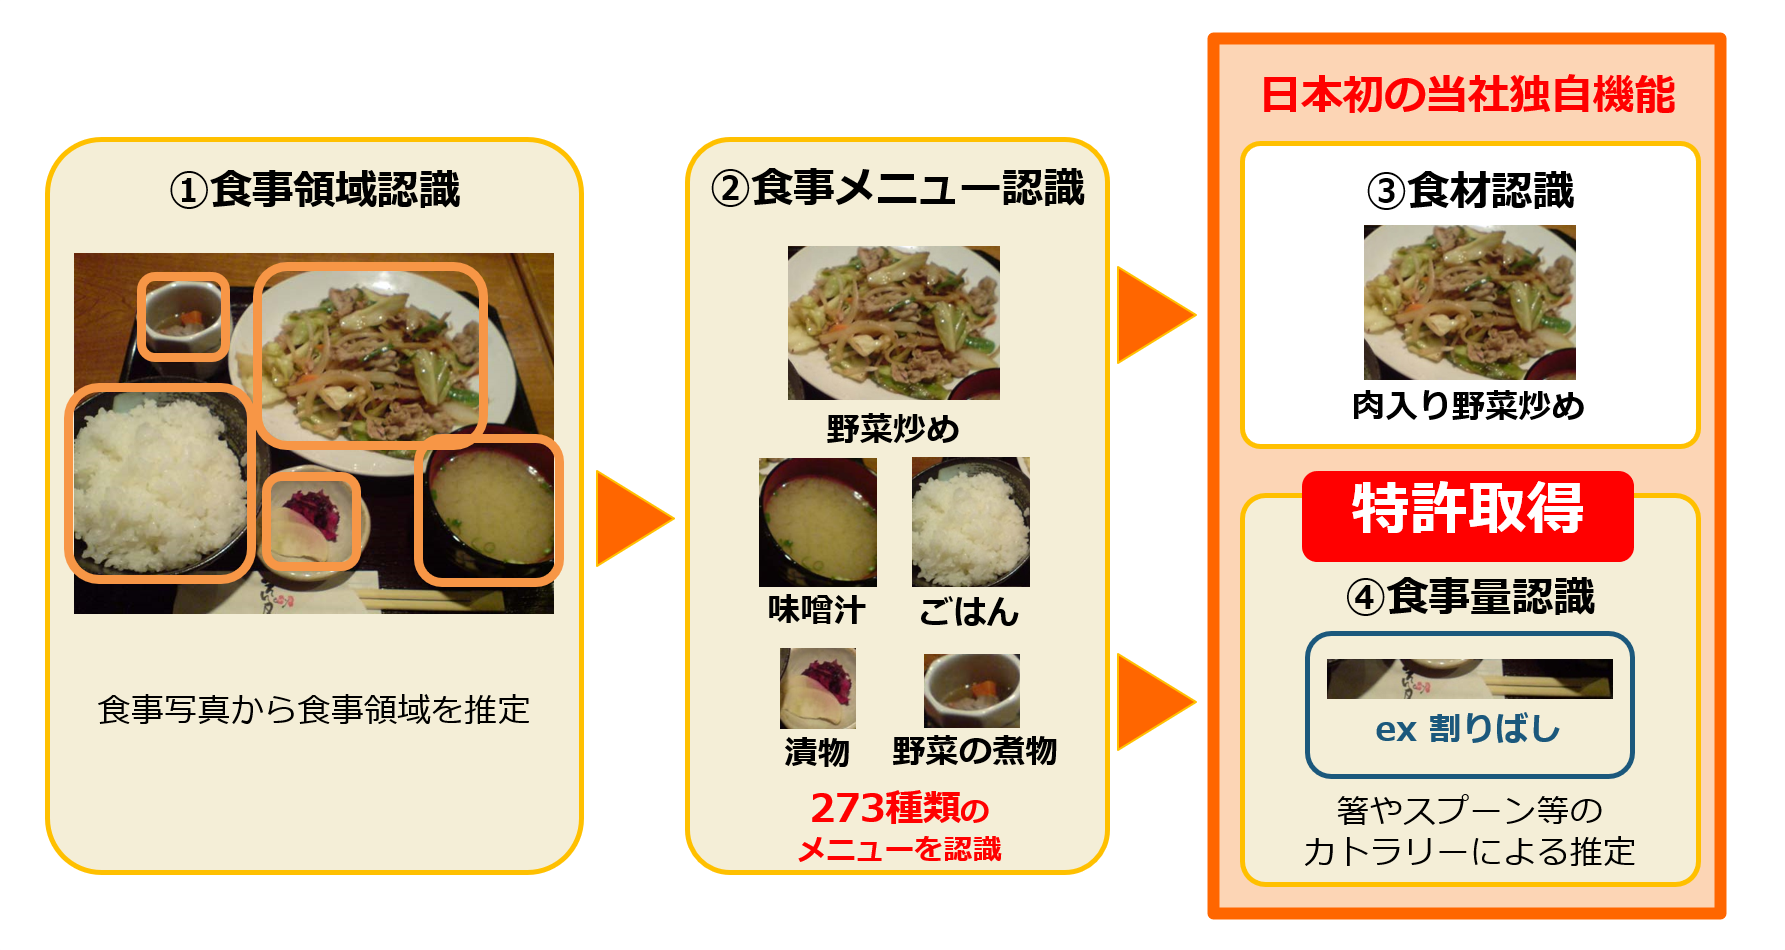 Ai健康アプリ カロママ シリーズの食事画像認識機能を大幅に強化 News 株式会社リンクアンドコミュニケーション